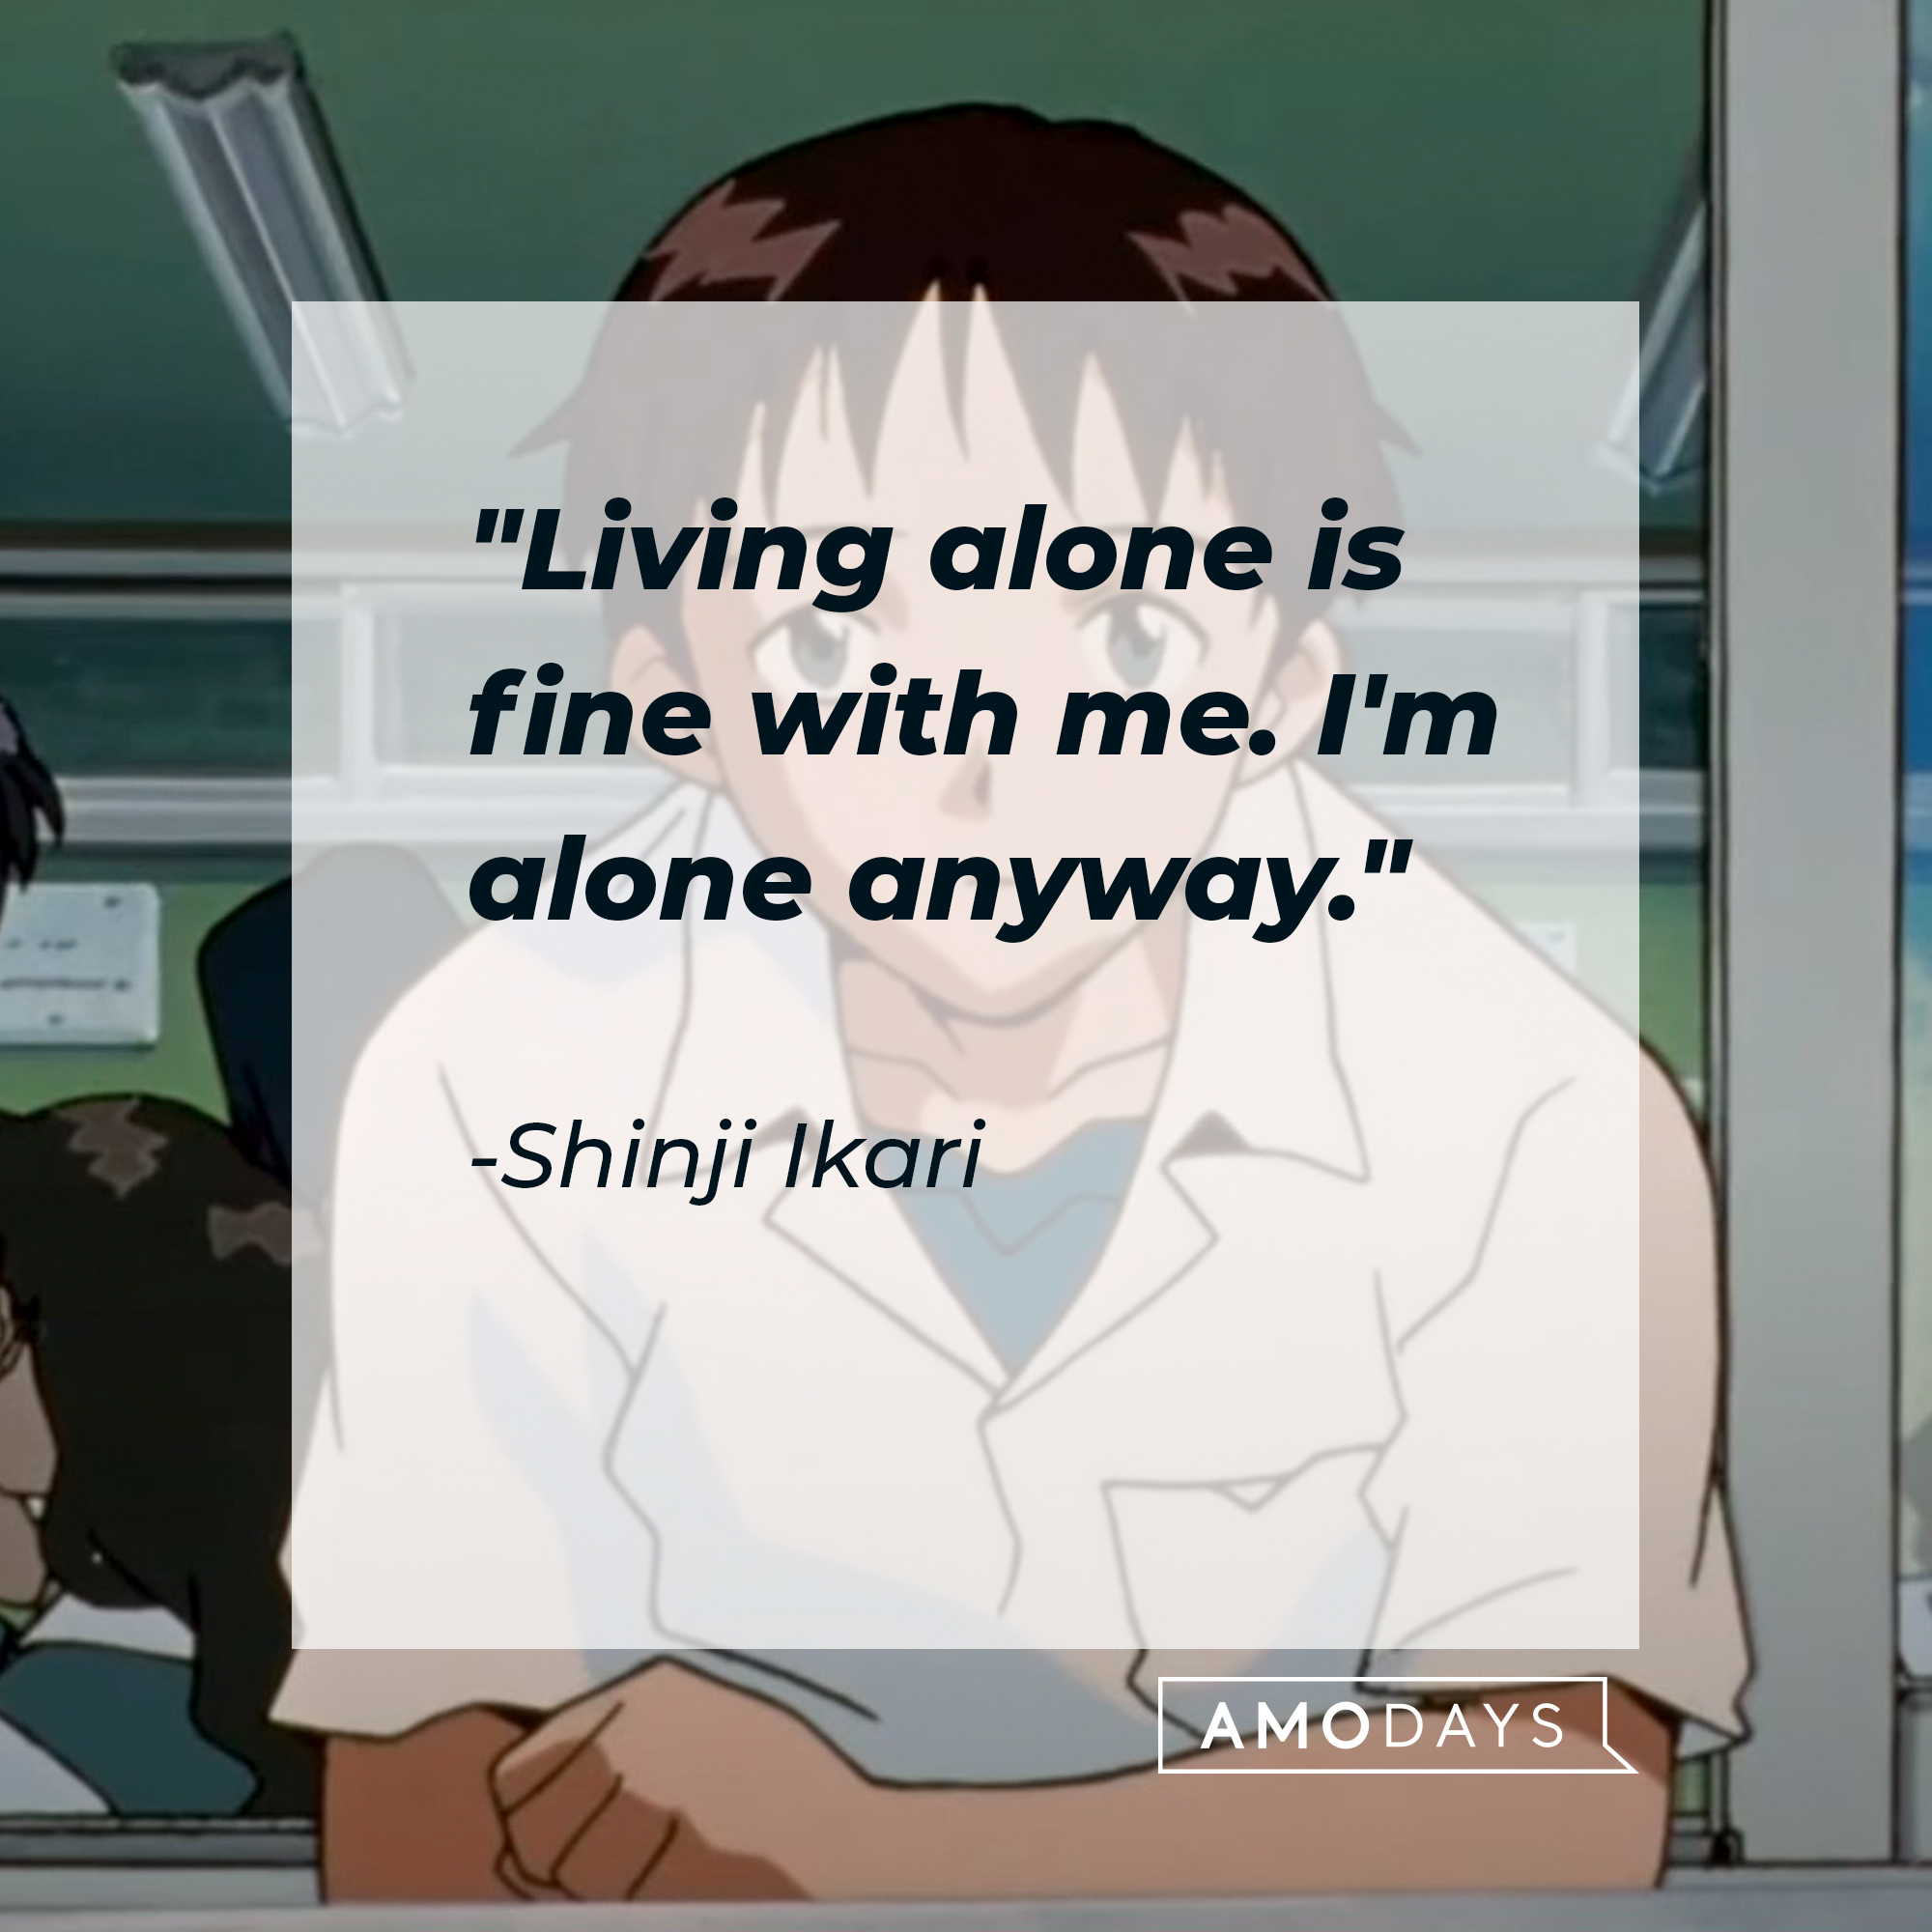 Shinji Ikari's quote: "Living alone is fine with me. I'm alone anyway." | Source: Facebook.com/EvangelionMovie